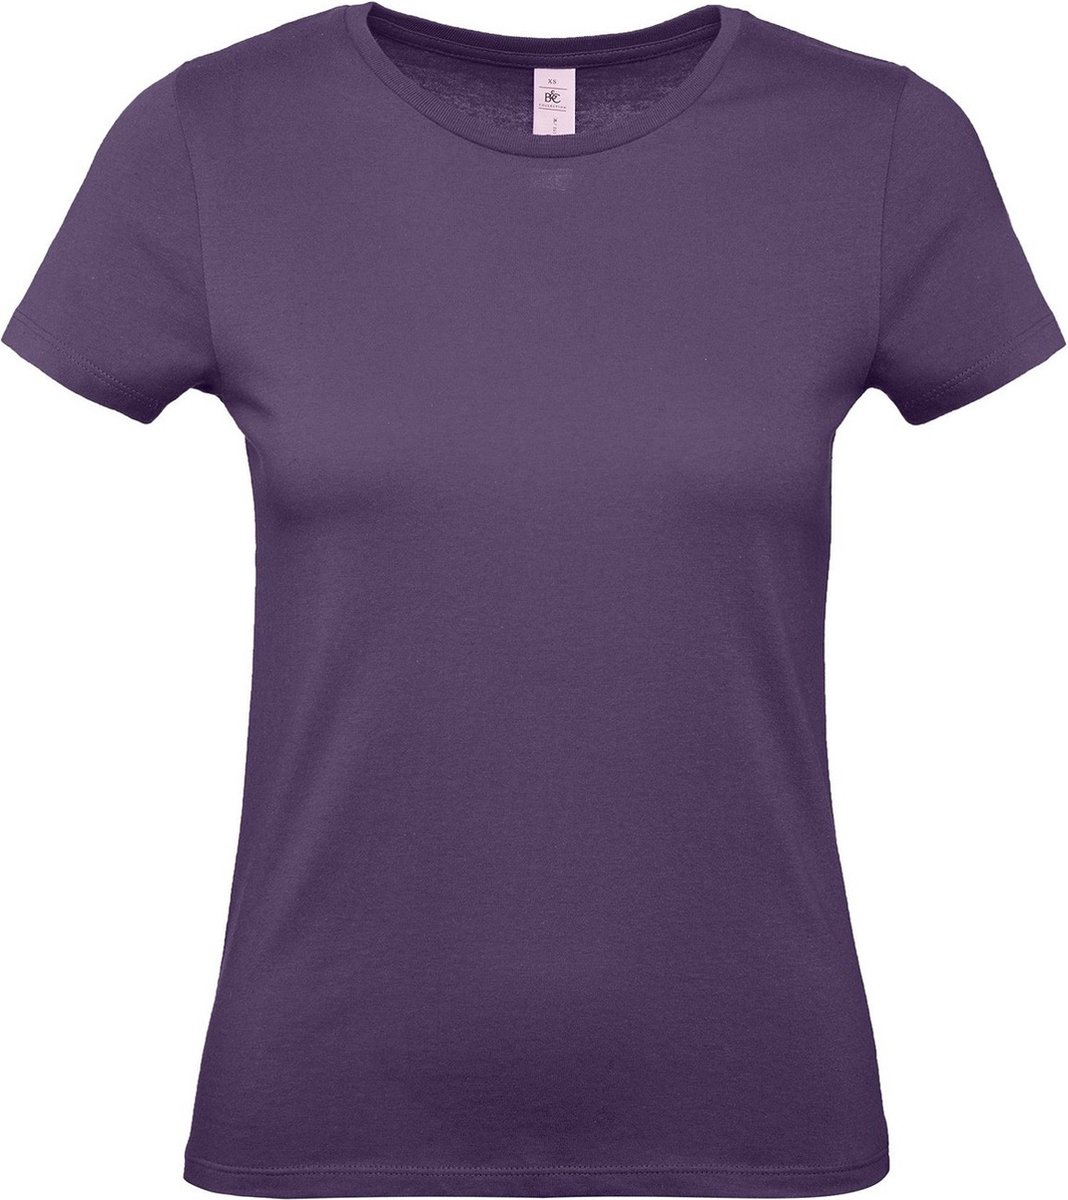 Paars basic t-shirt met ronde hals voor dames - katoen - 145 grams - paarse shirts / kleding S (50)